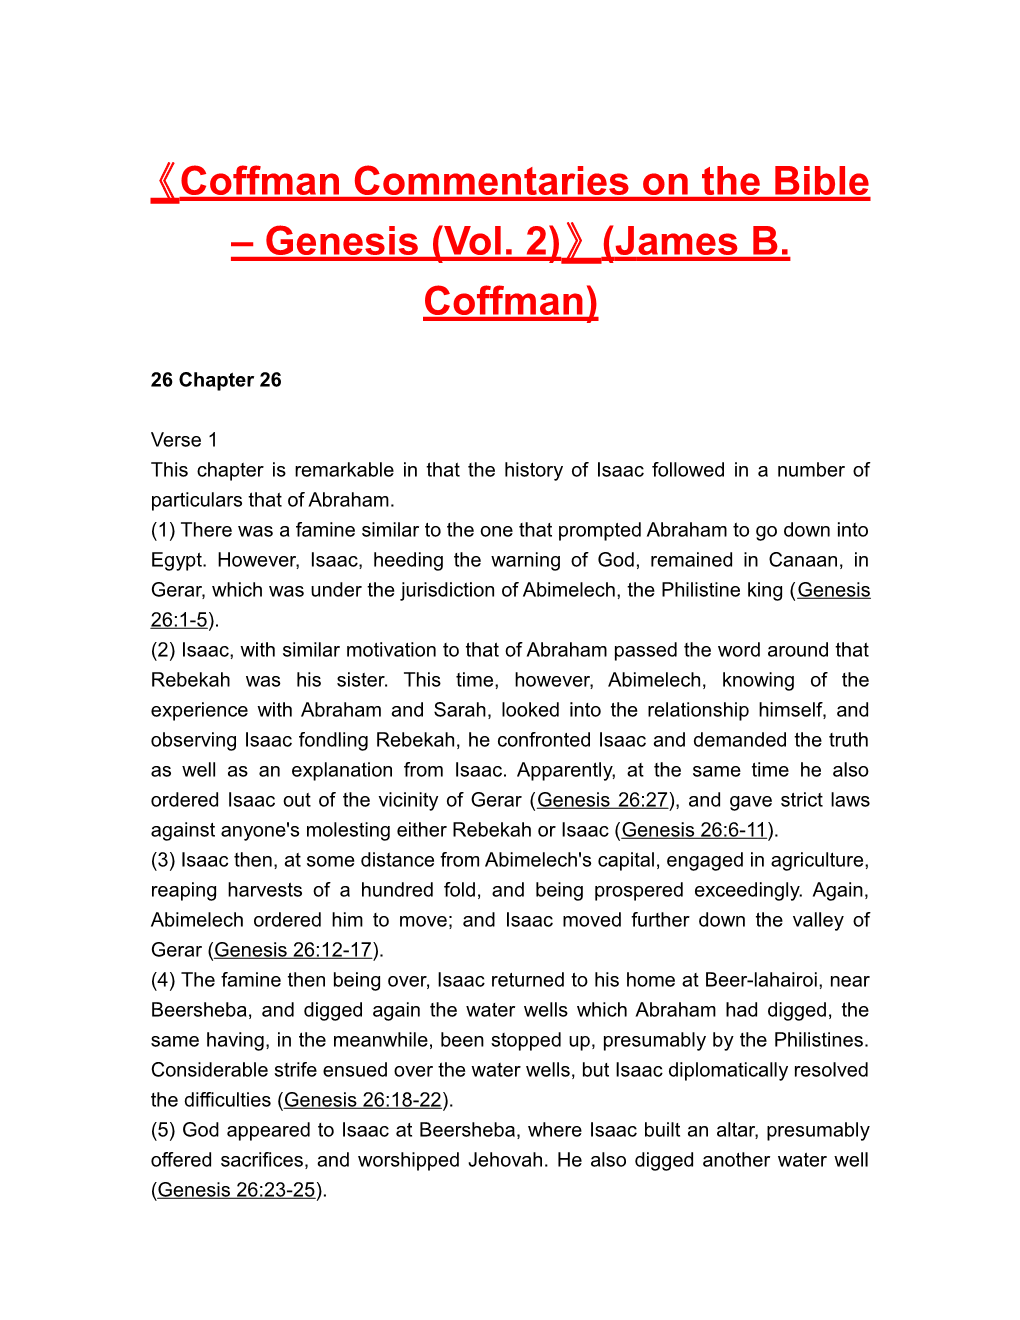 Coffman Commentaries on the Bible Genesis (Vol. 2) (James B. Coffman)